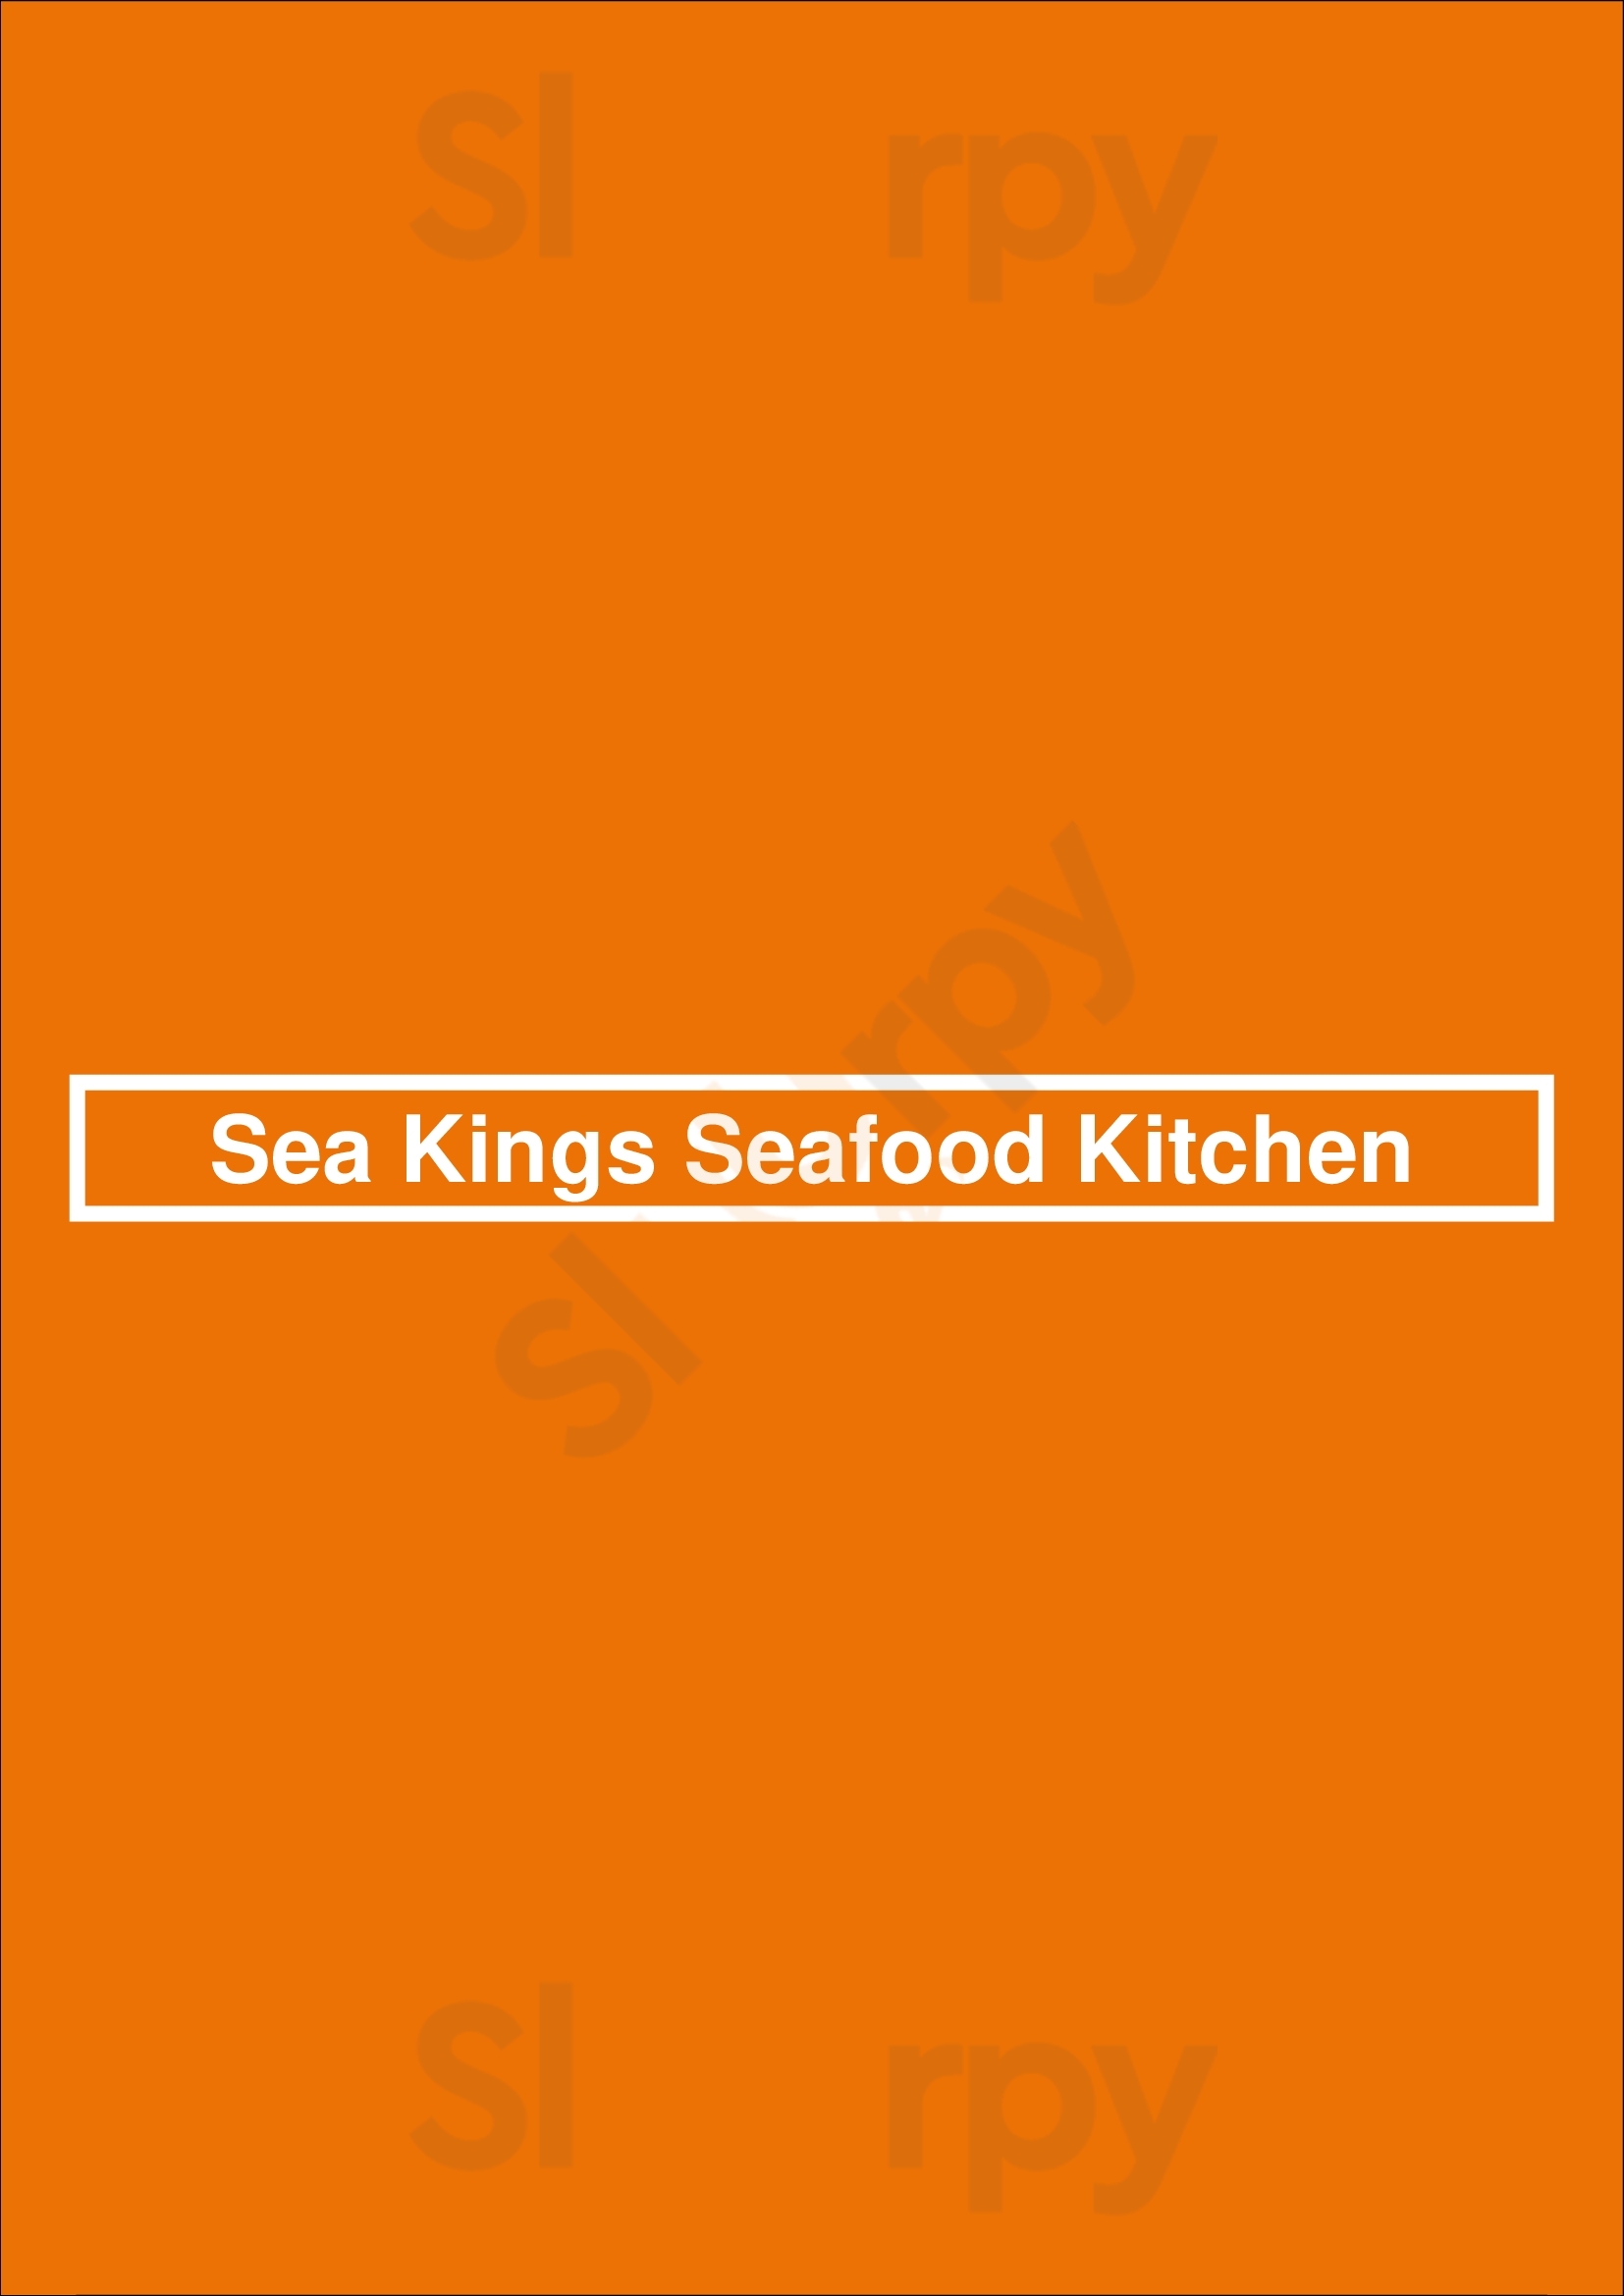 Sea Kings Seafood Kitchen Indianapolis Menu - 1